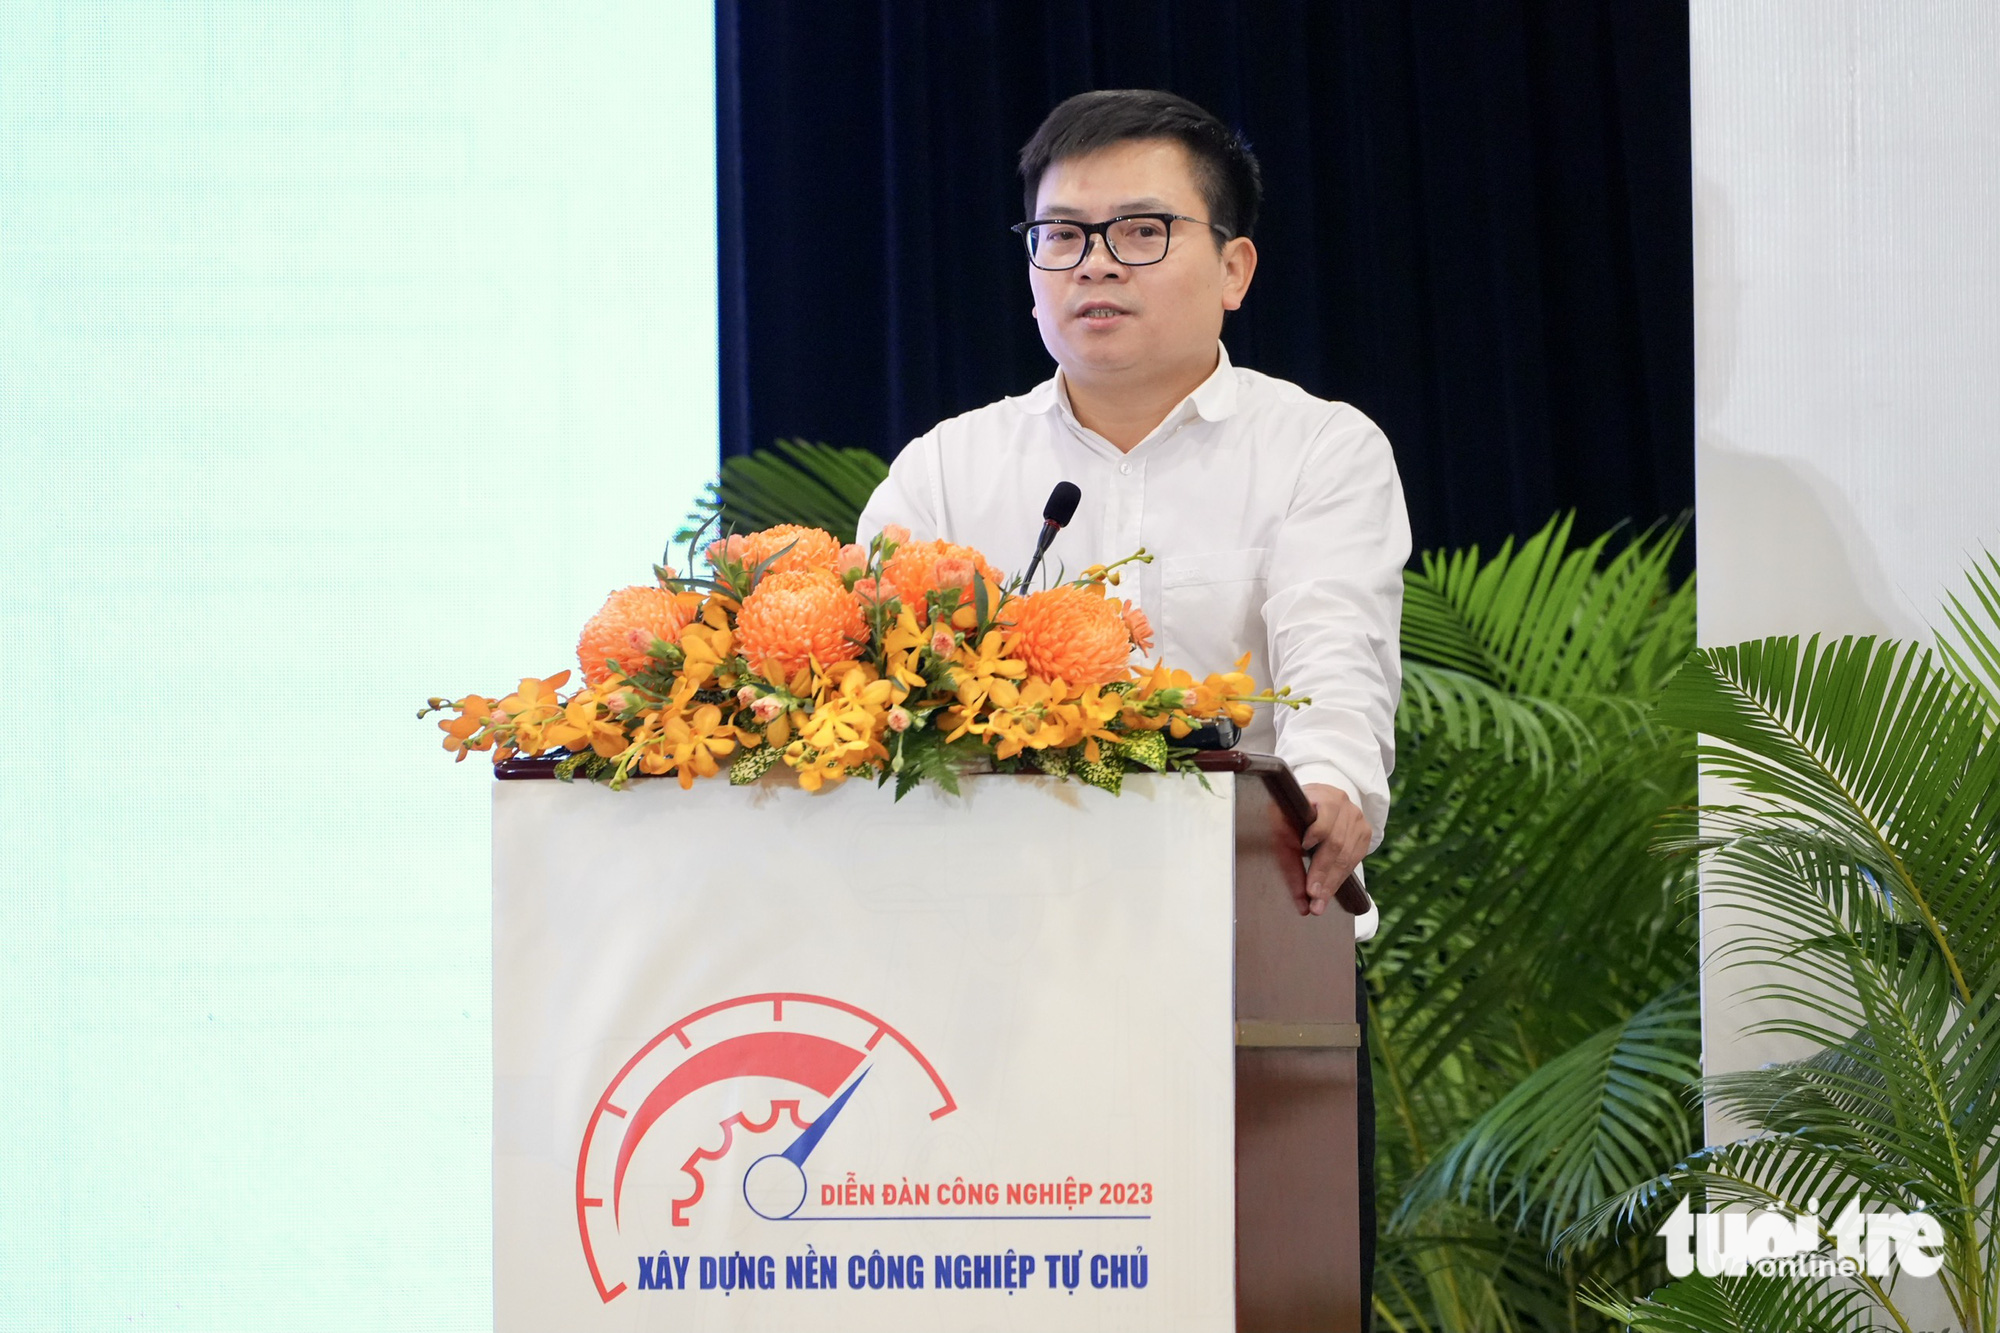 Vietnamese industrial enterprises need favorable tax policies